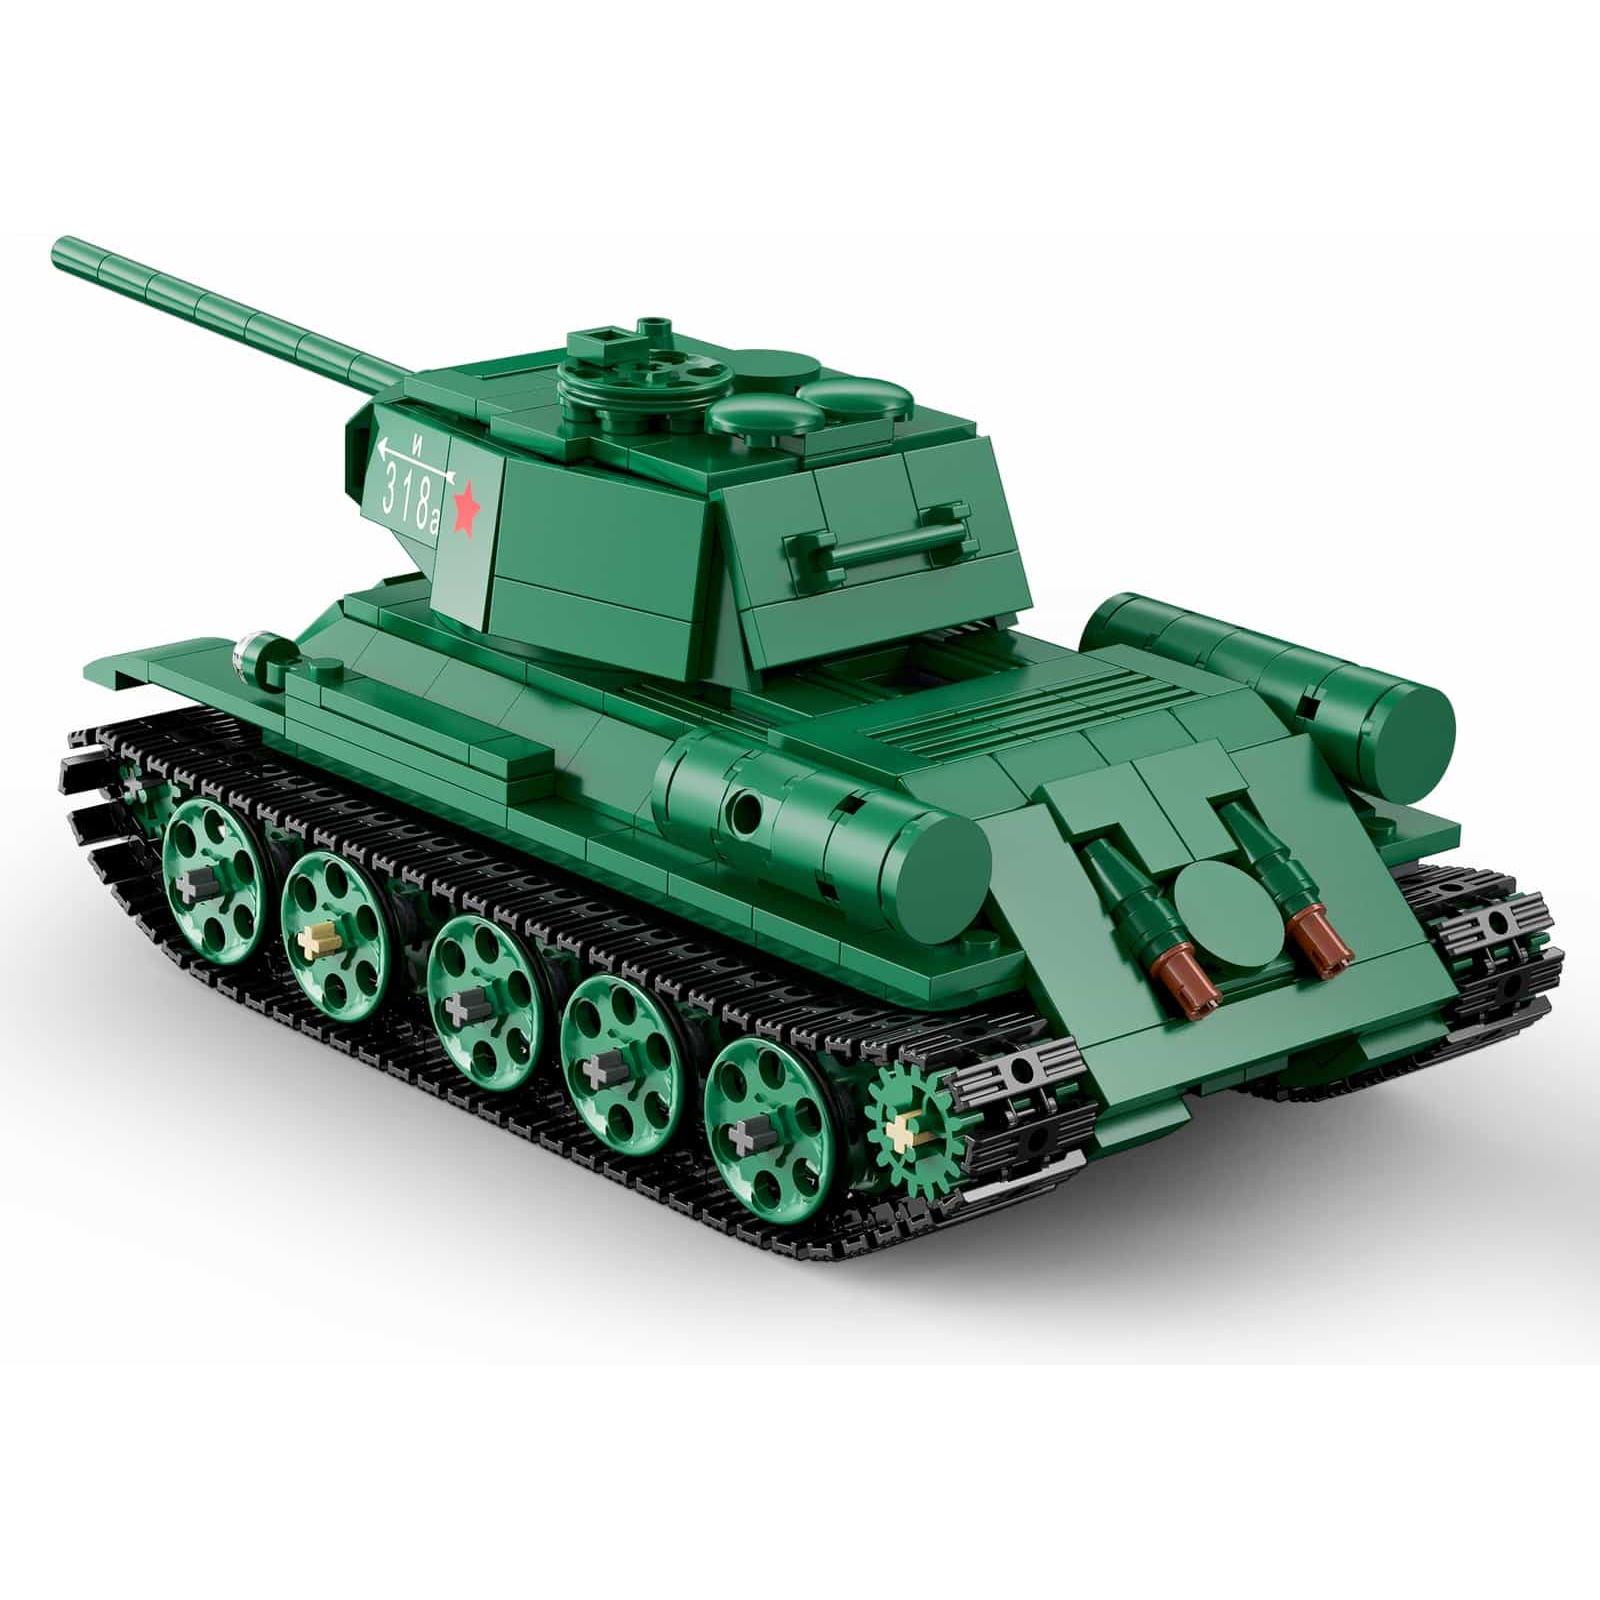 CaDA 1:35 Scale Model T-34 Medium Tank Remote Controlled Brick Building Set 722 Pieces